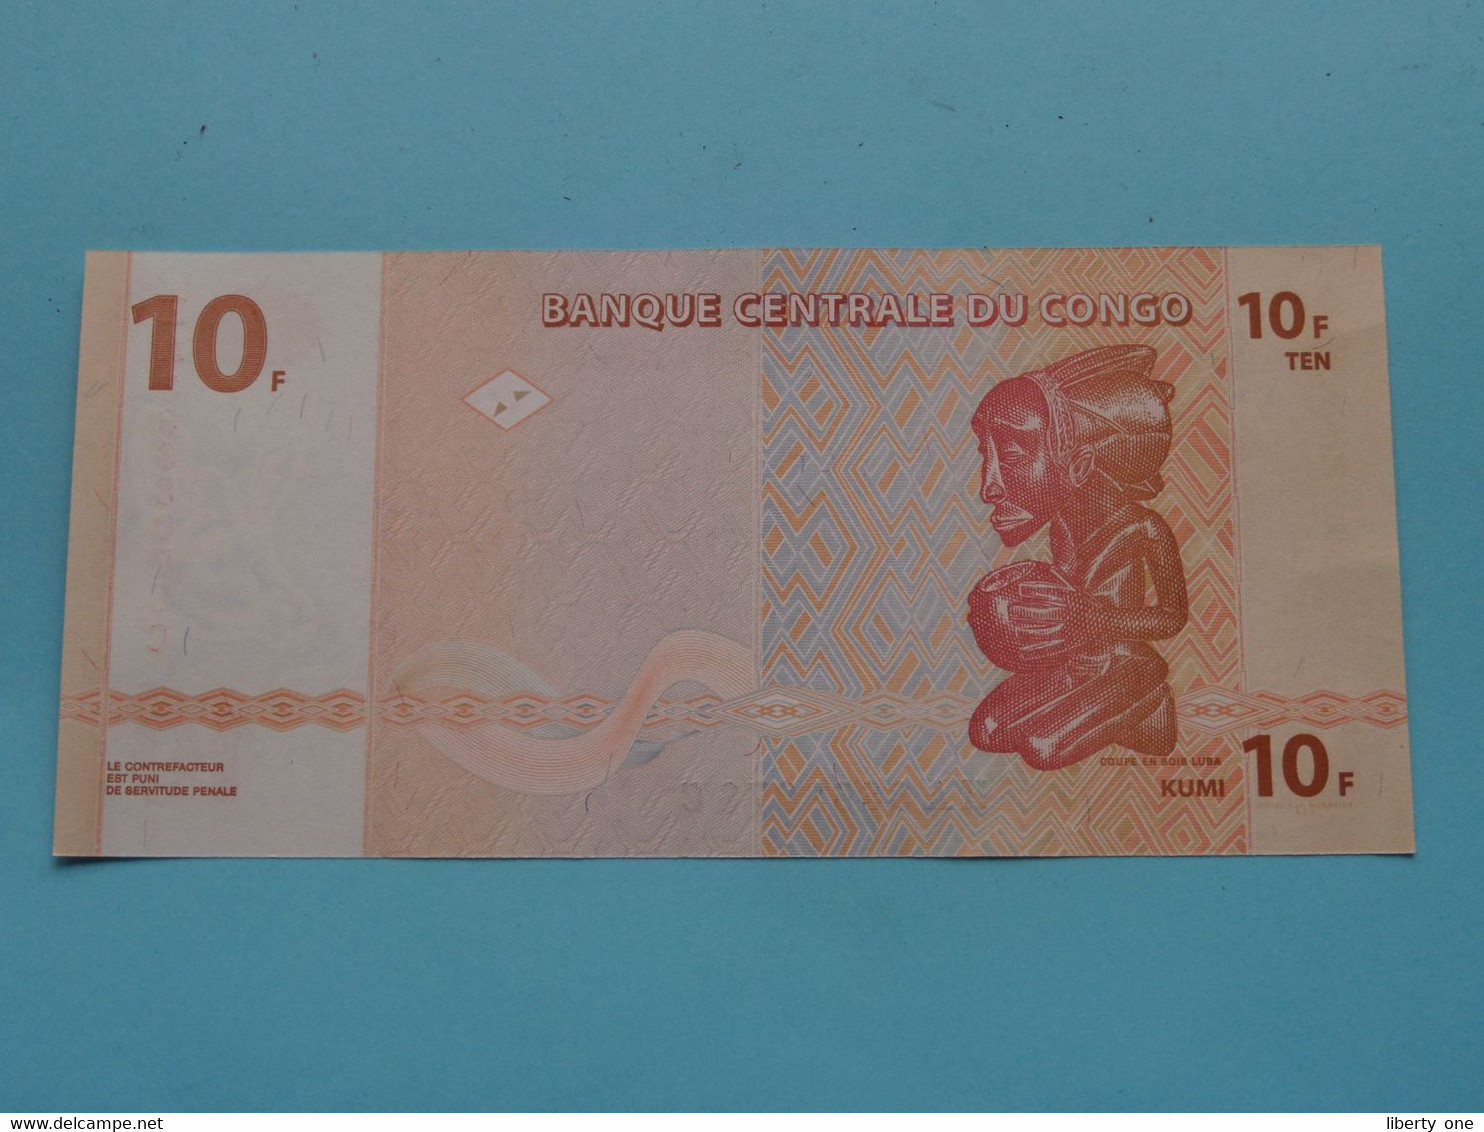 10 ( Dix ) Francs ( HA3668076C ) 2003 > Banque Centrale Du CONGO ( For Grade, Please See Photo ) UNC ! - Republic Of Congo (Congo-Brazzaville)